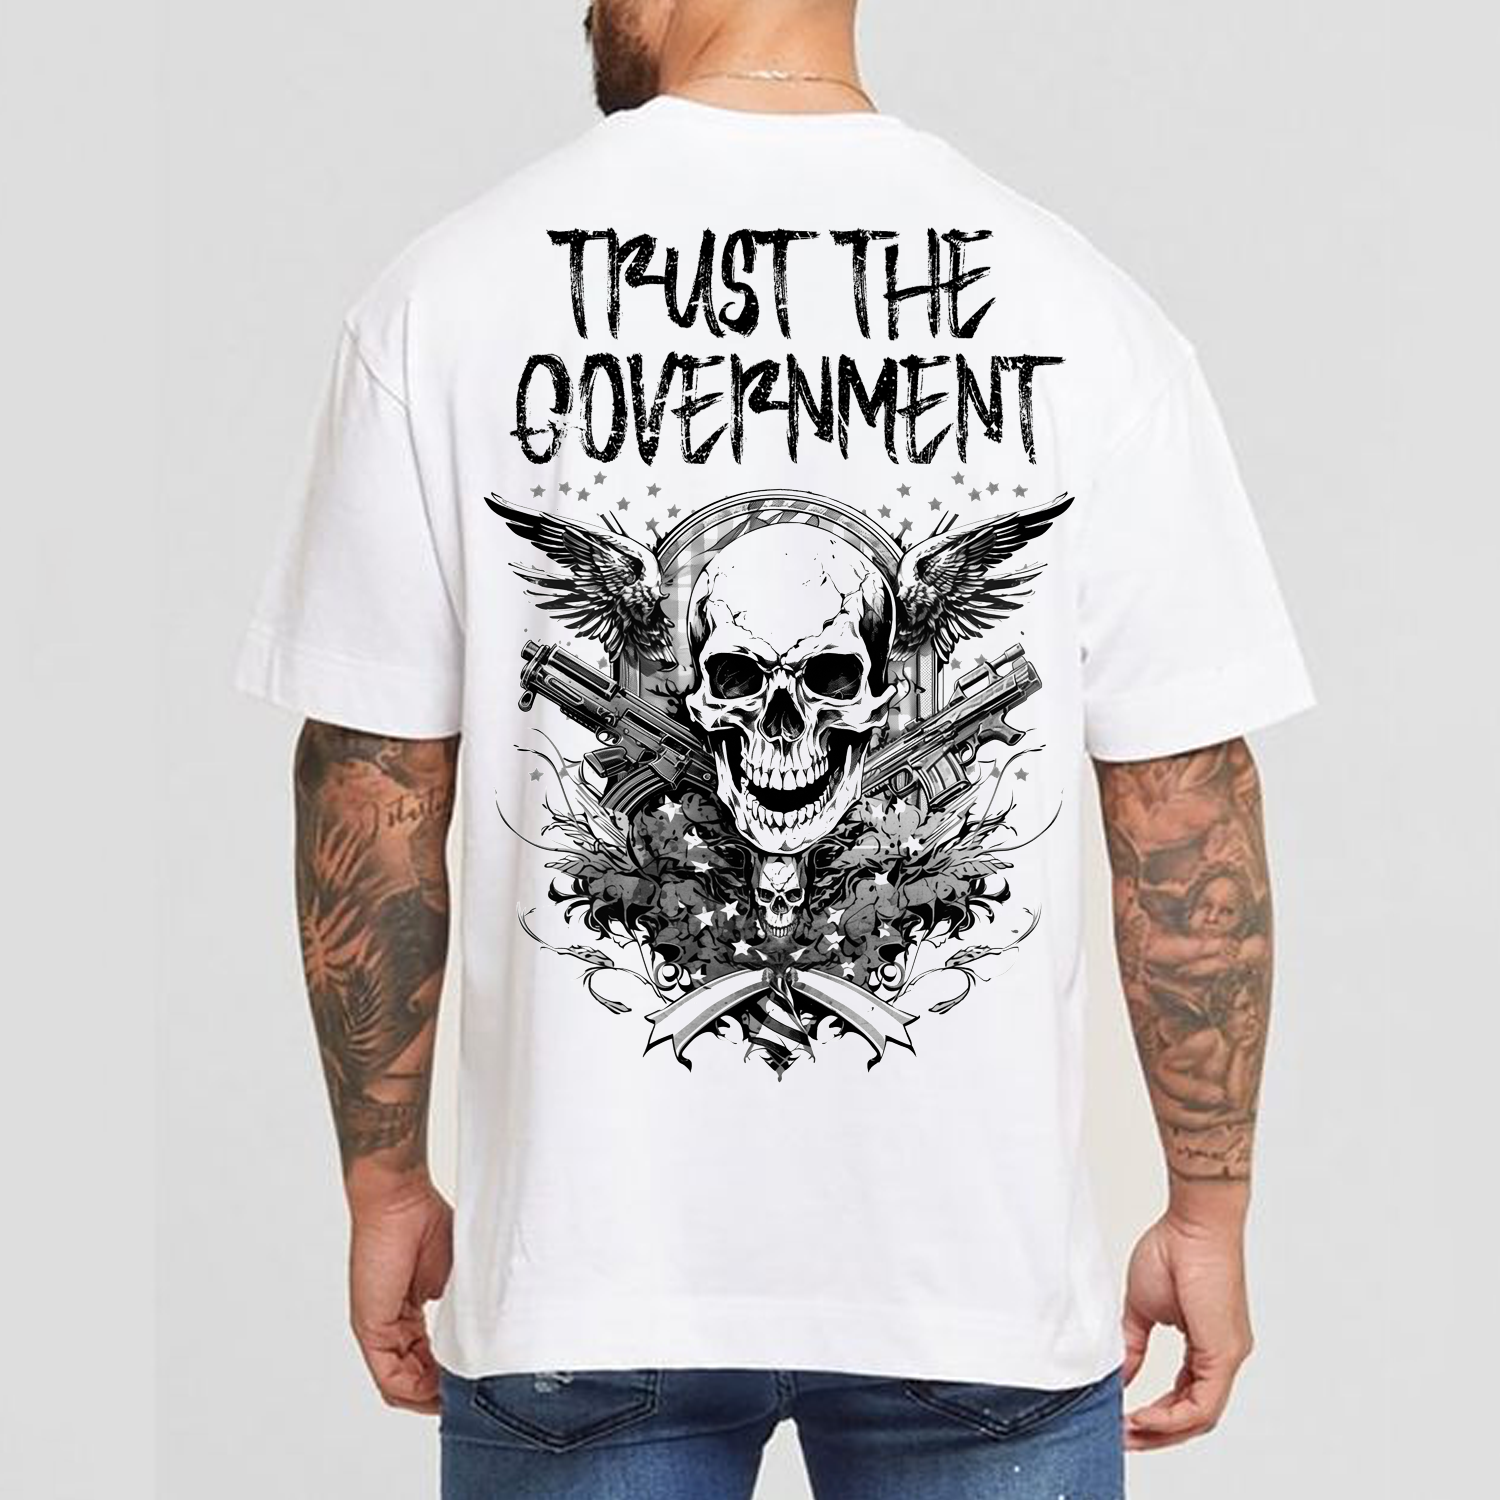 Trust The Government Men's Short Sleeve T-shirt